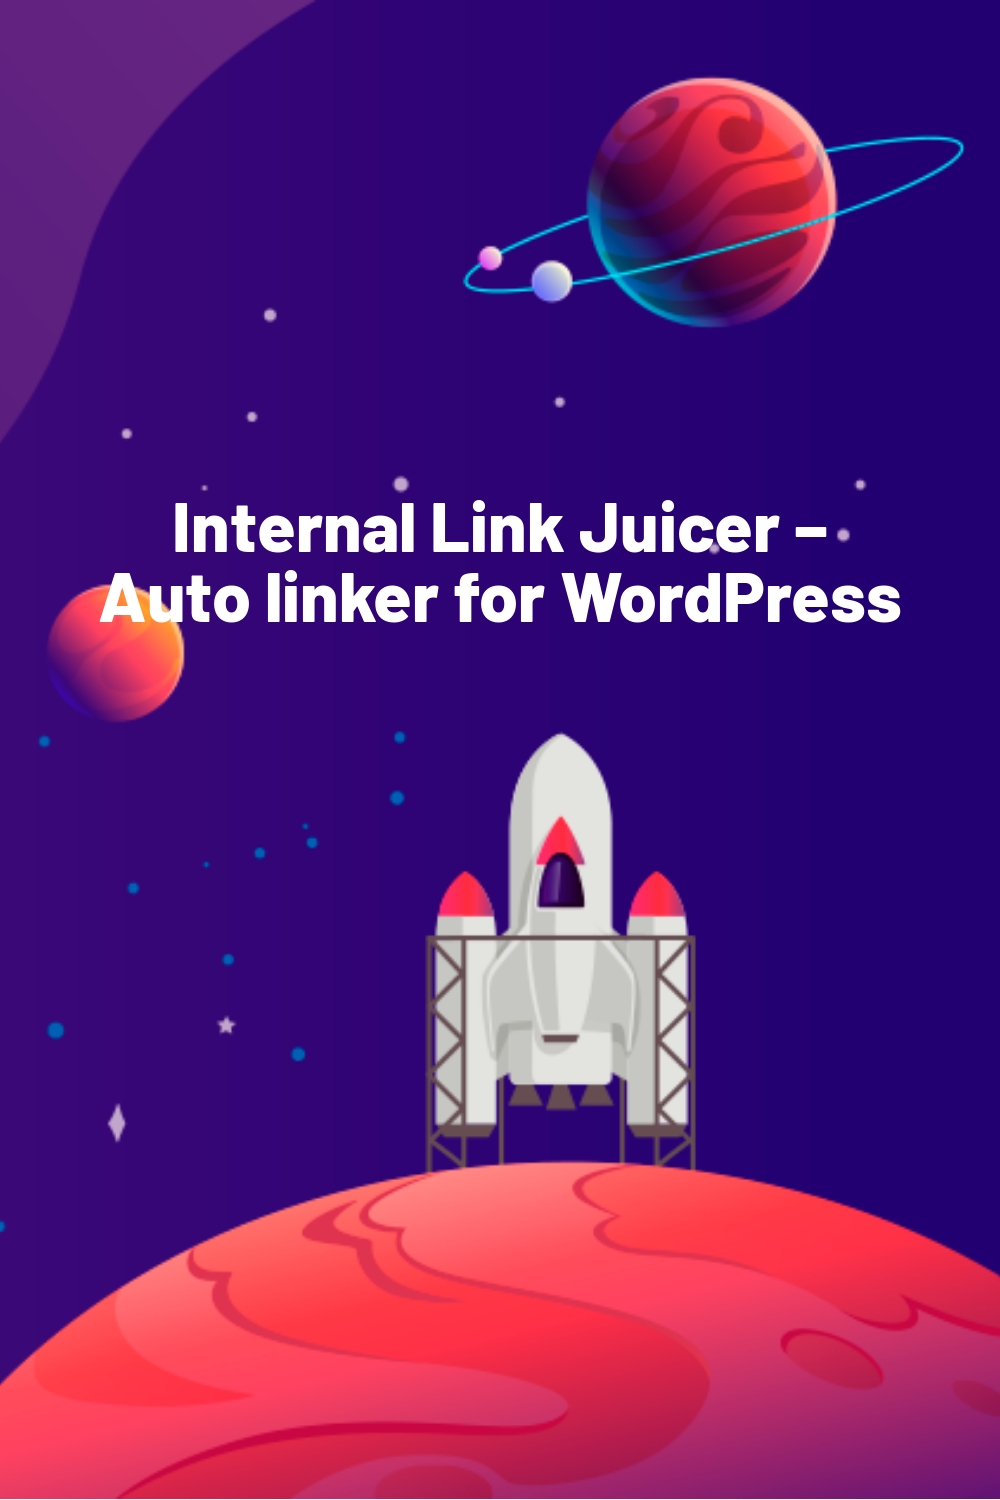 Internal Link Juicer – Auto linker for WordPress